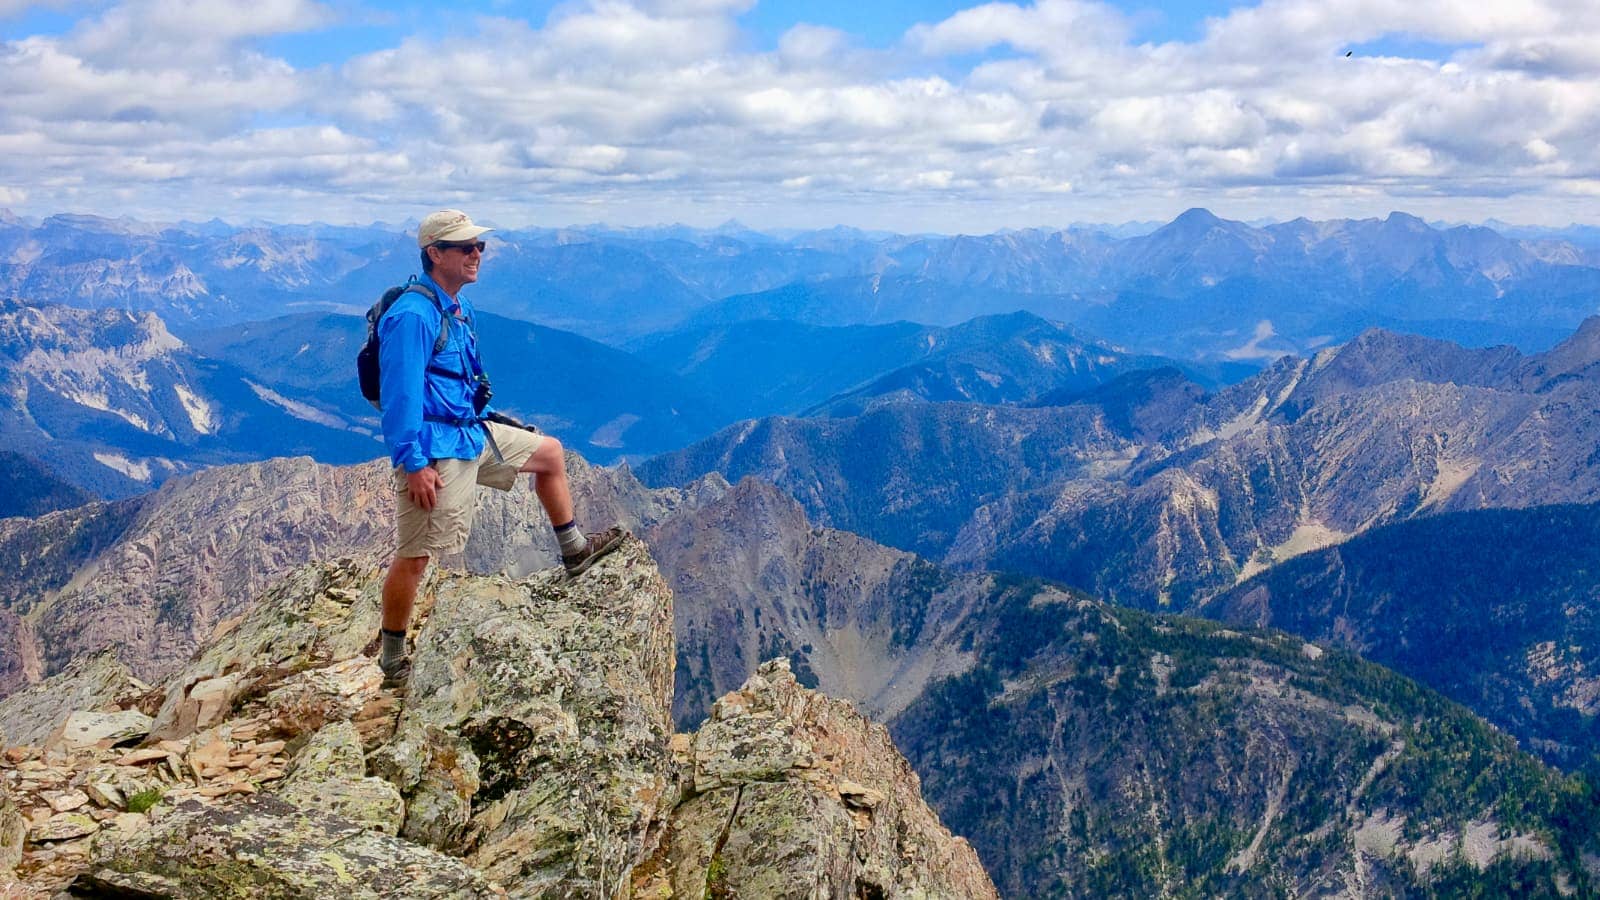 Man in blue jacket standing on mountain peak